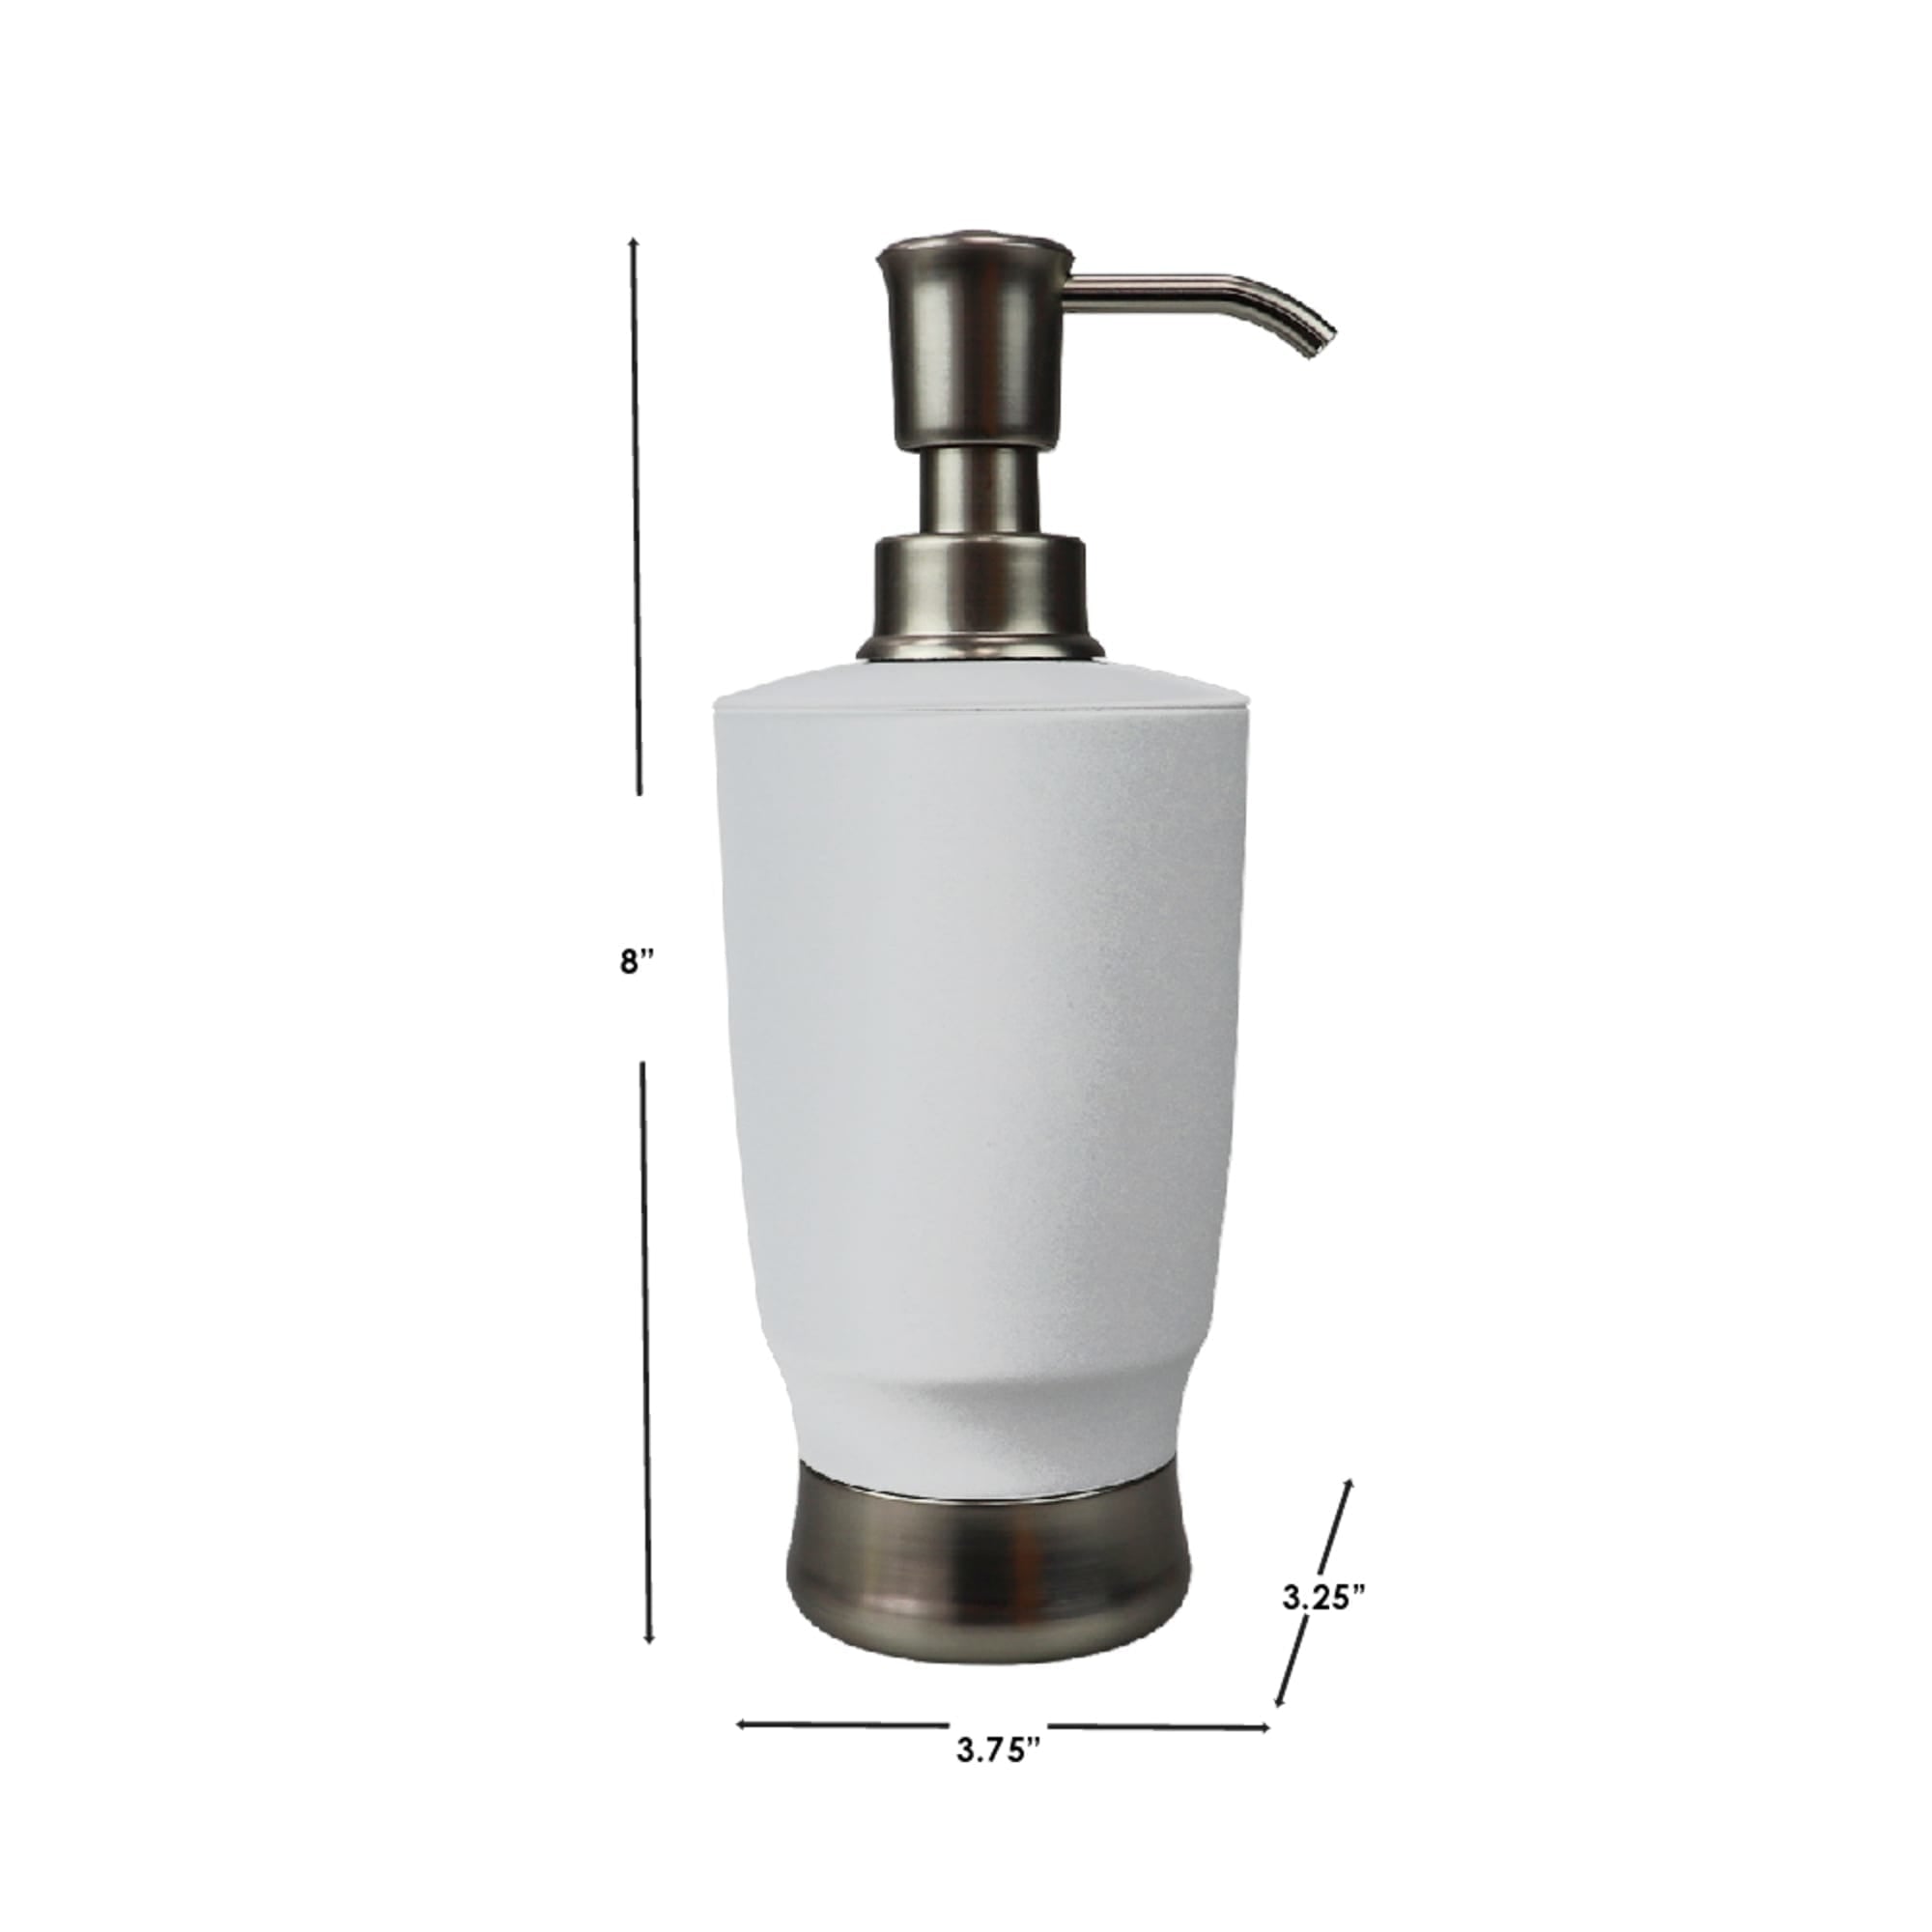 Home Basics Rubberized Plastic Countertop Soap Dispenser, White $5.00 EACH, CASE PACK OF 12